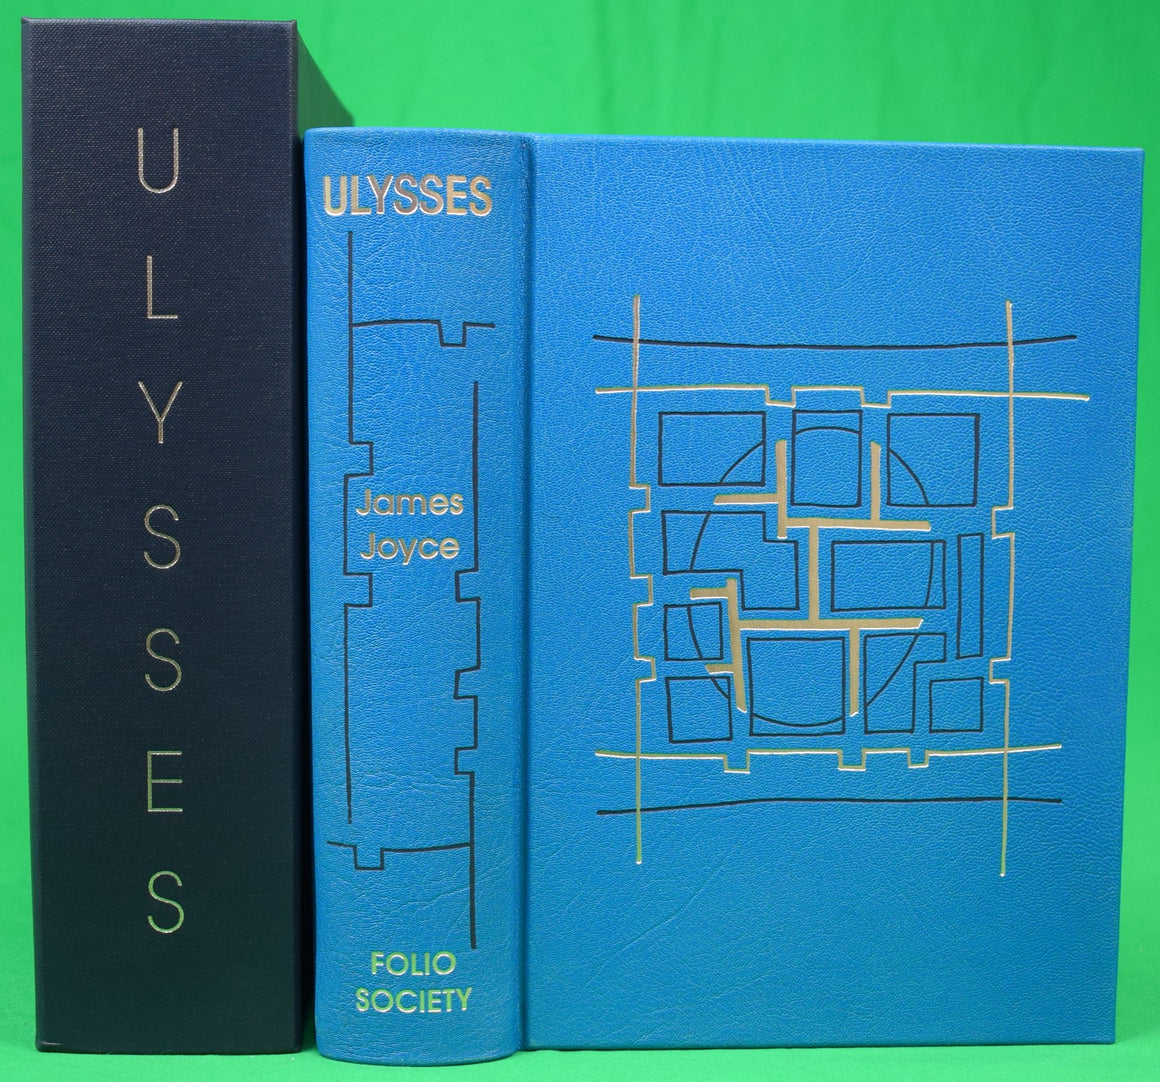 "Ulysses" 1998 JOYCE, James